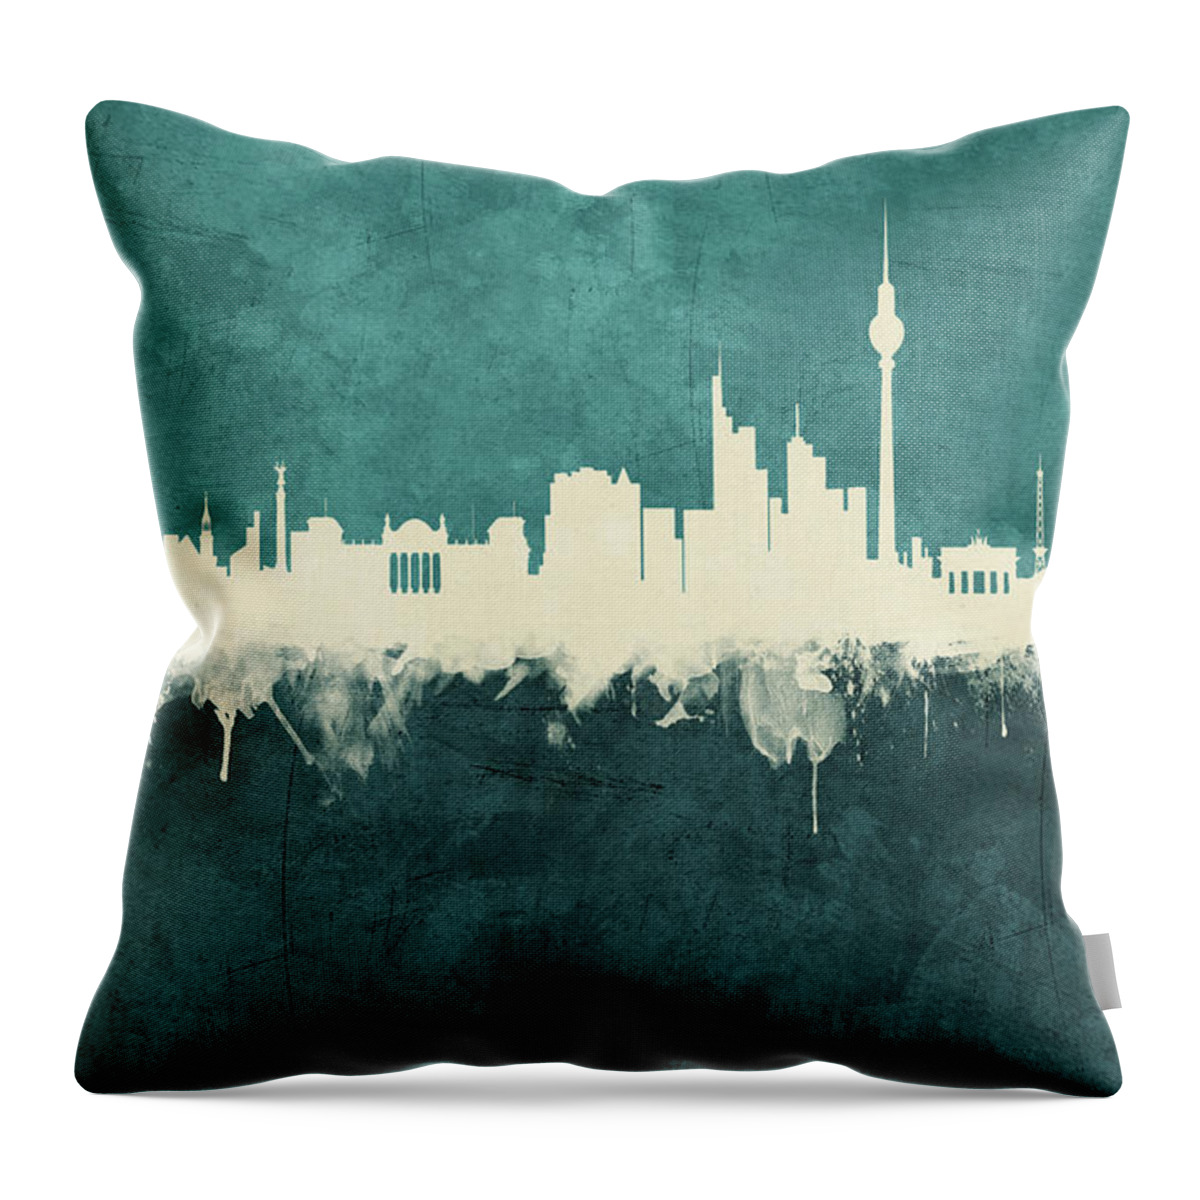 Berlin Throw Pillow featuring the digital art Berlin Germany Skyline #51 by Michael Tompsett